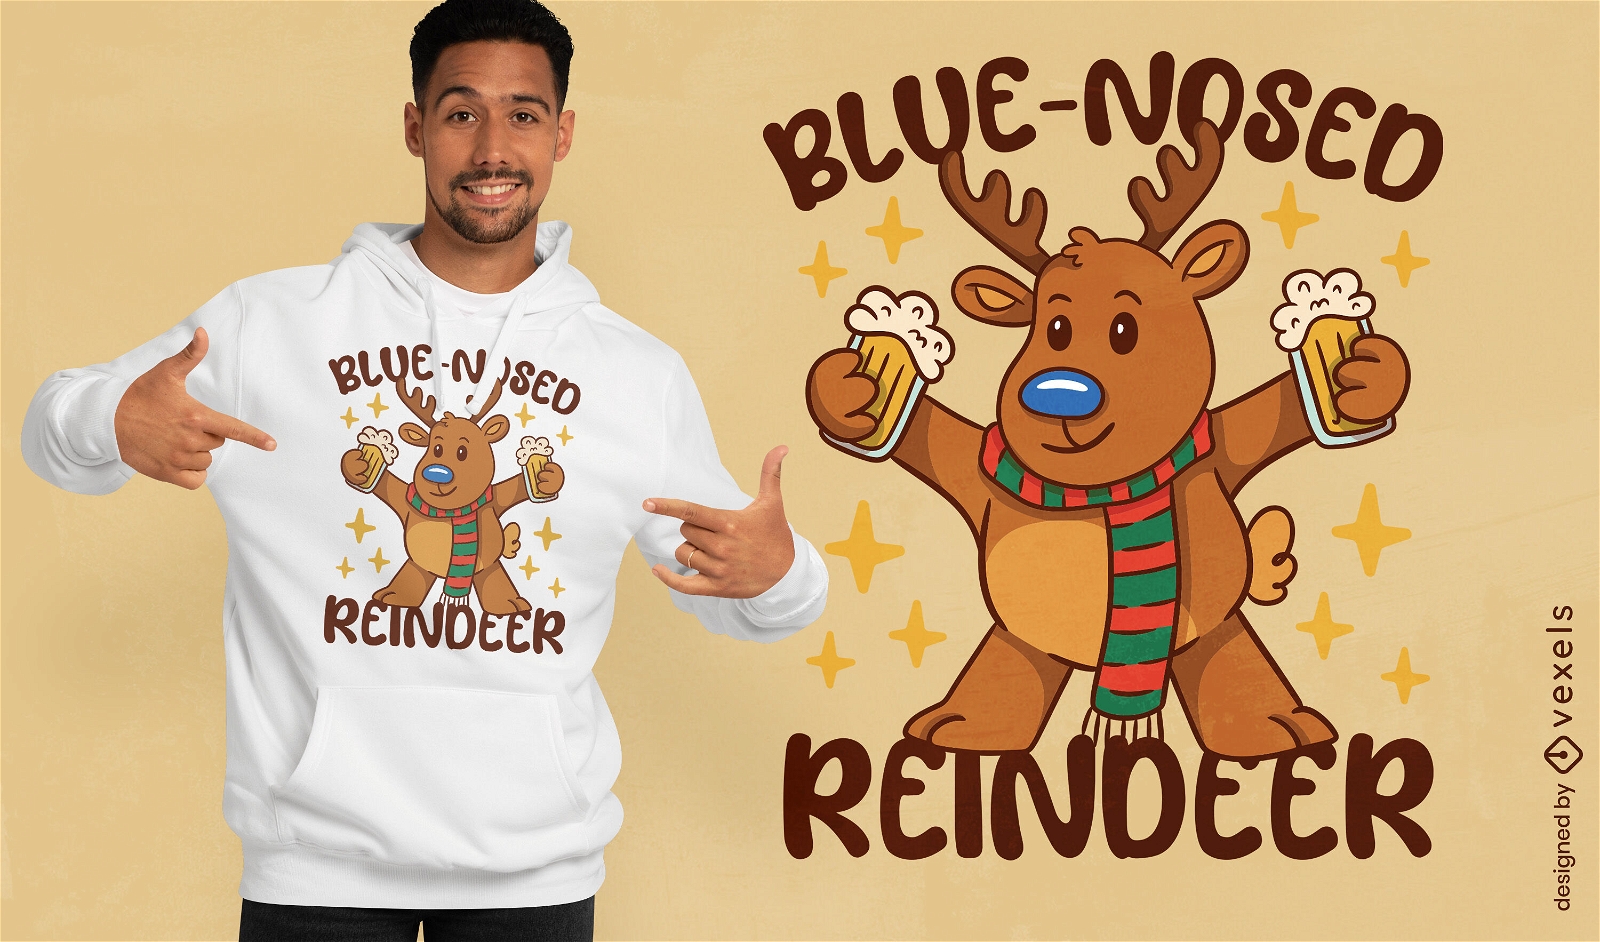 Festive reindeer t-shirt design